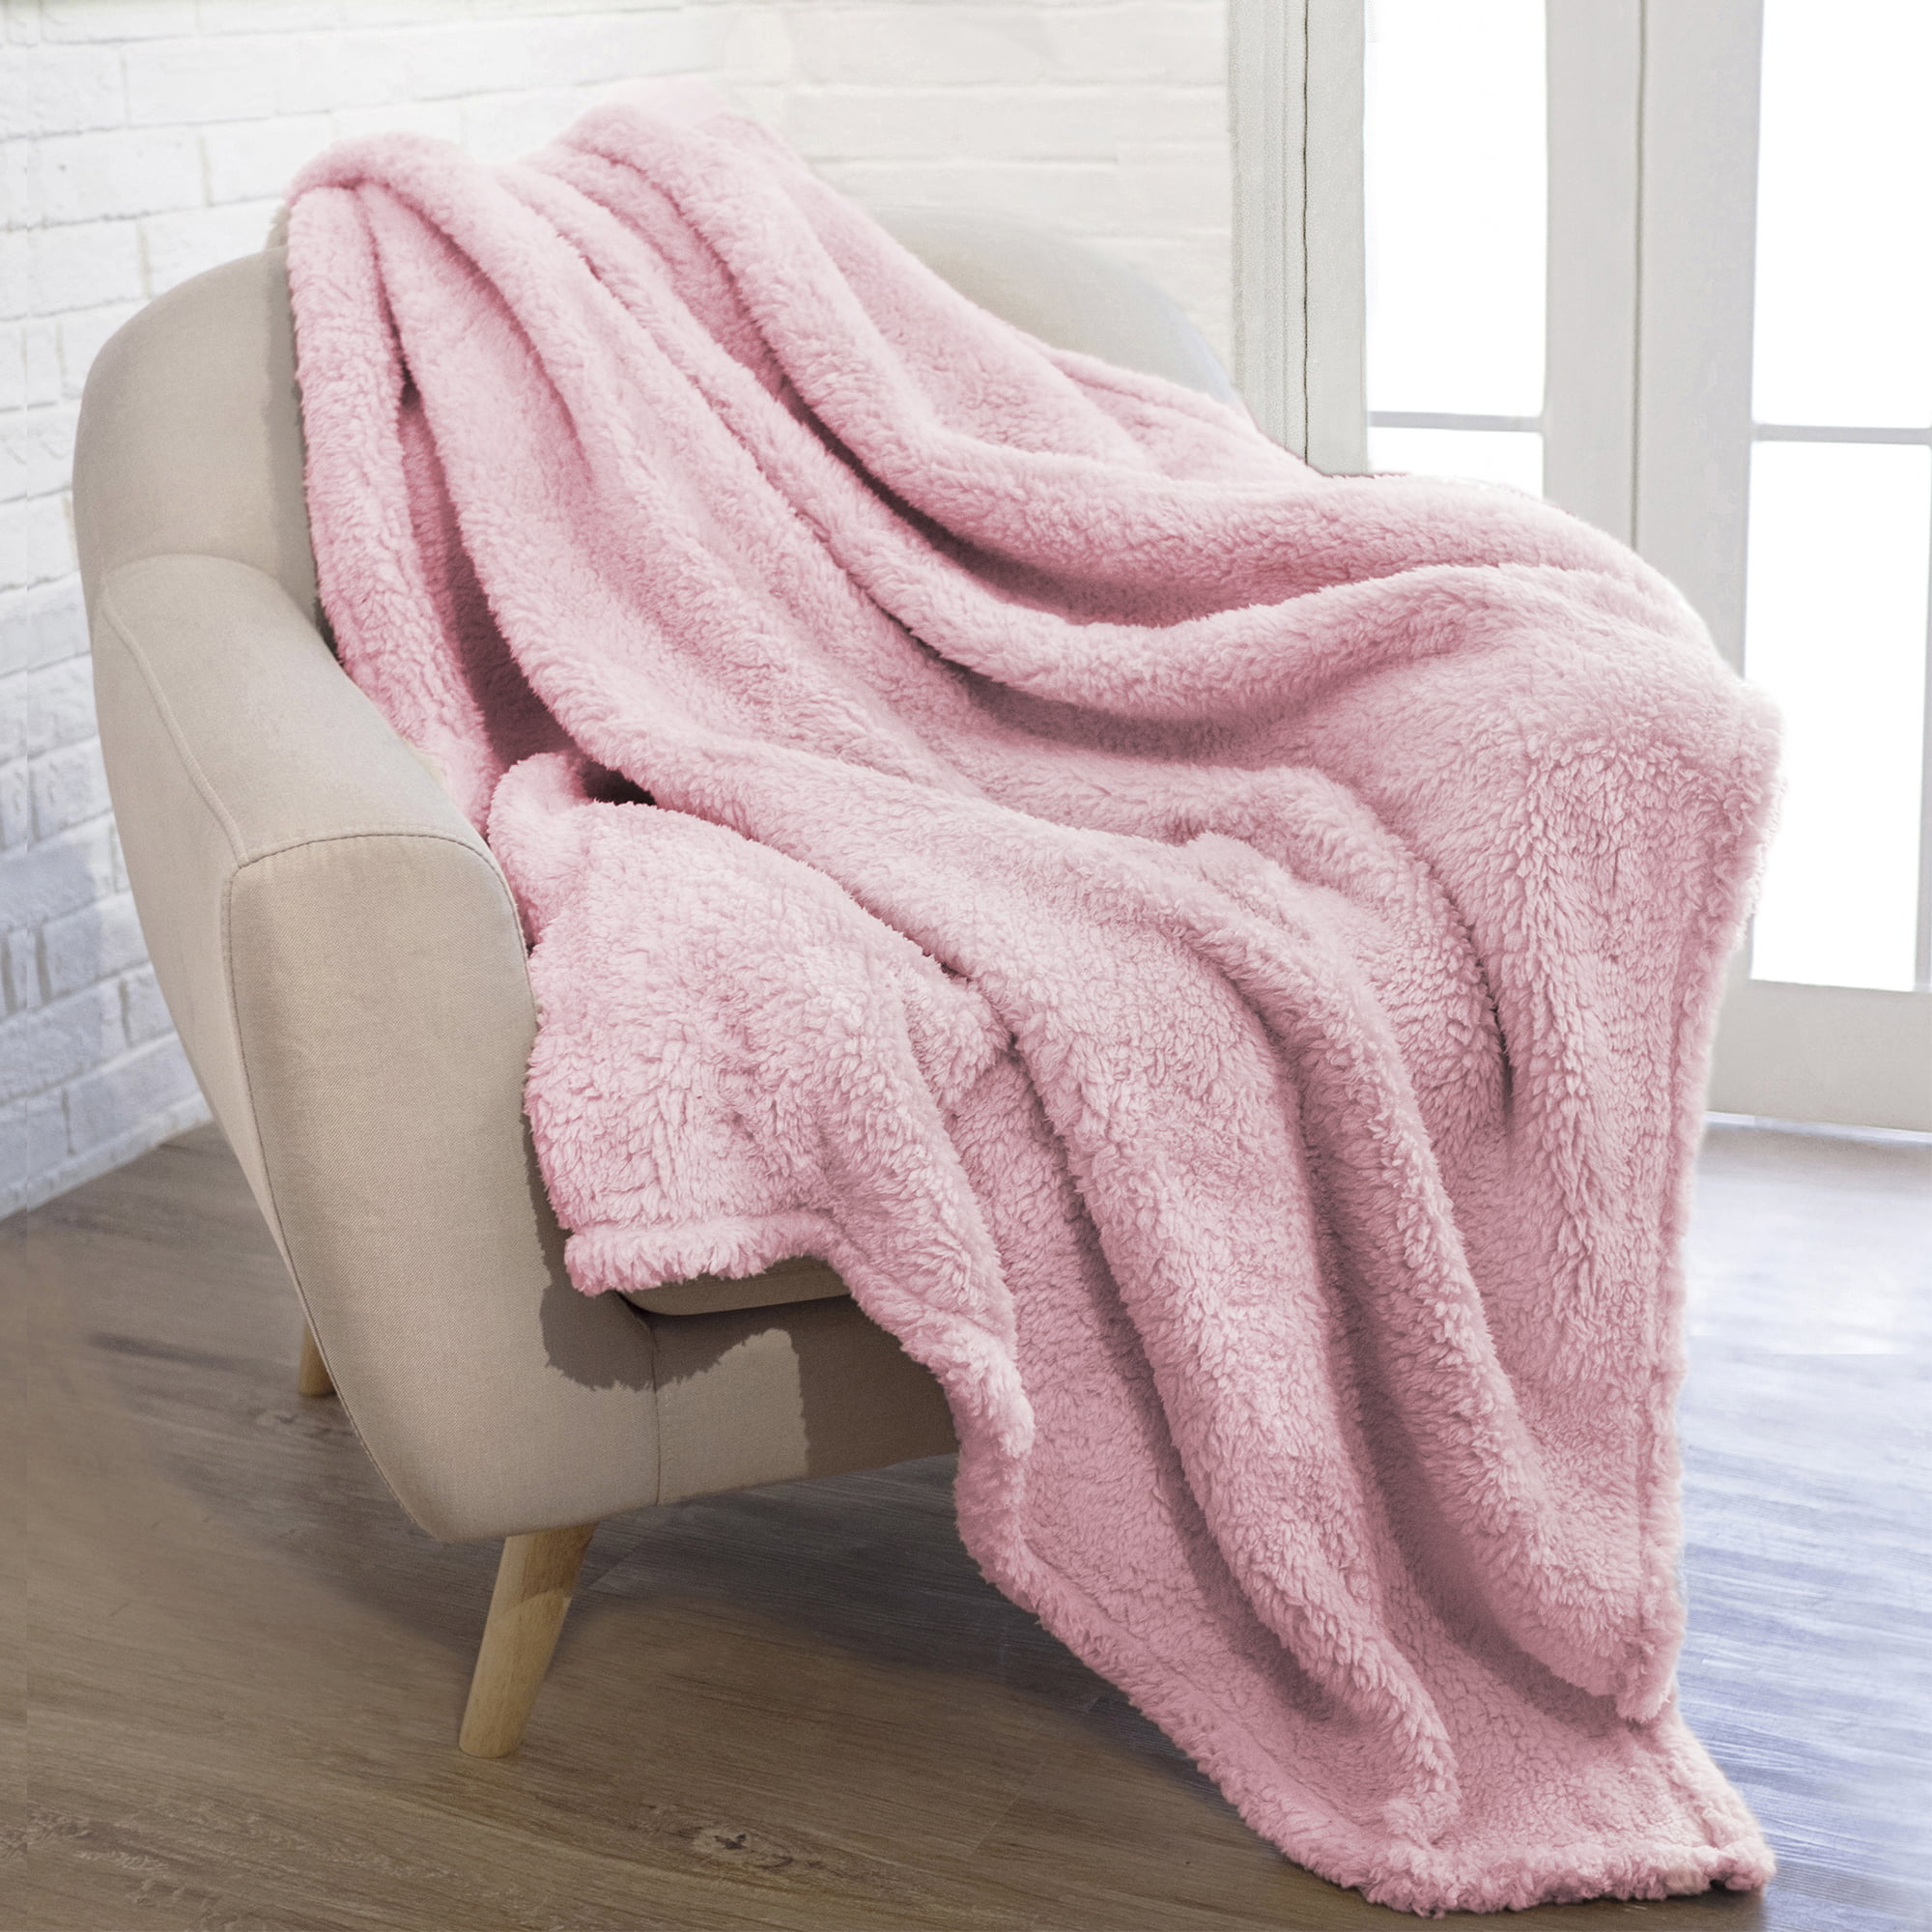 Blanket Throw for Couch Sofa Cute Animal Soft Plush Throw Fleece Blanket Fuzzy Fluffy Decorative Blanket Microfiber 60x50